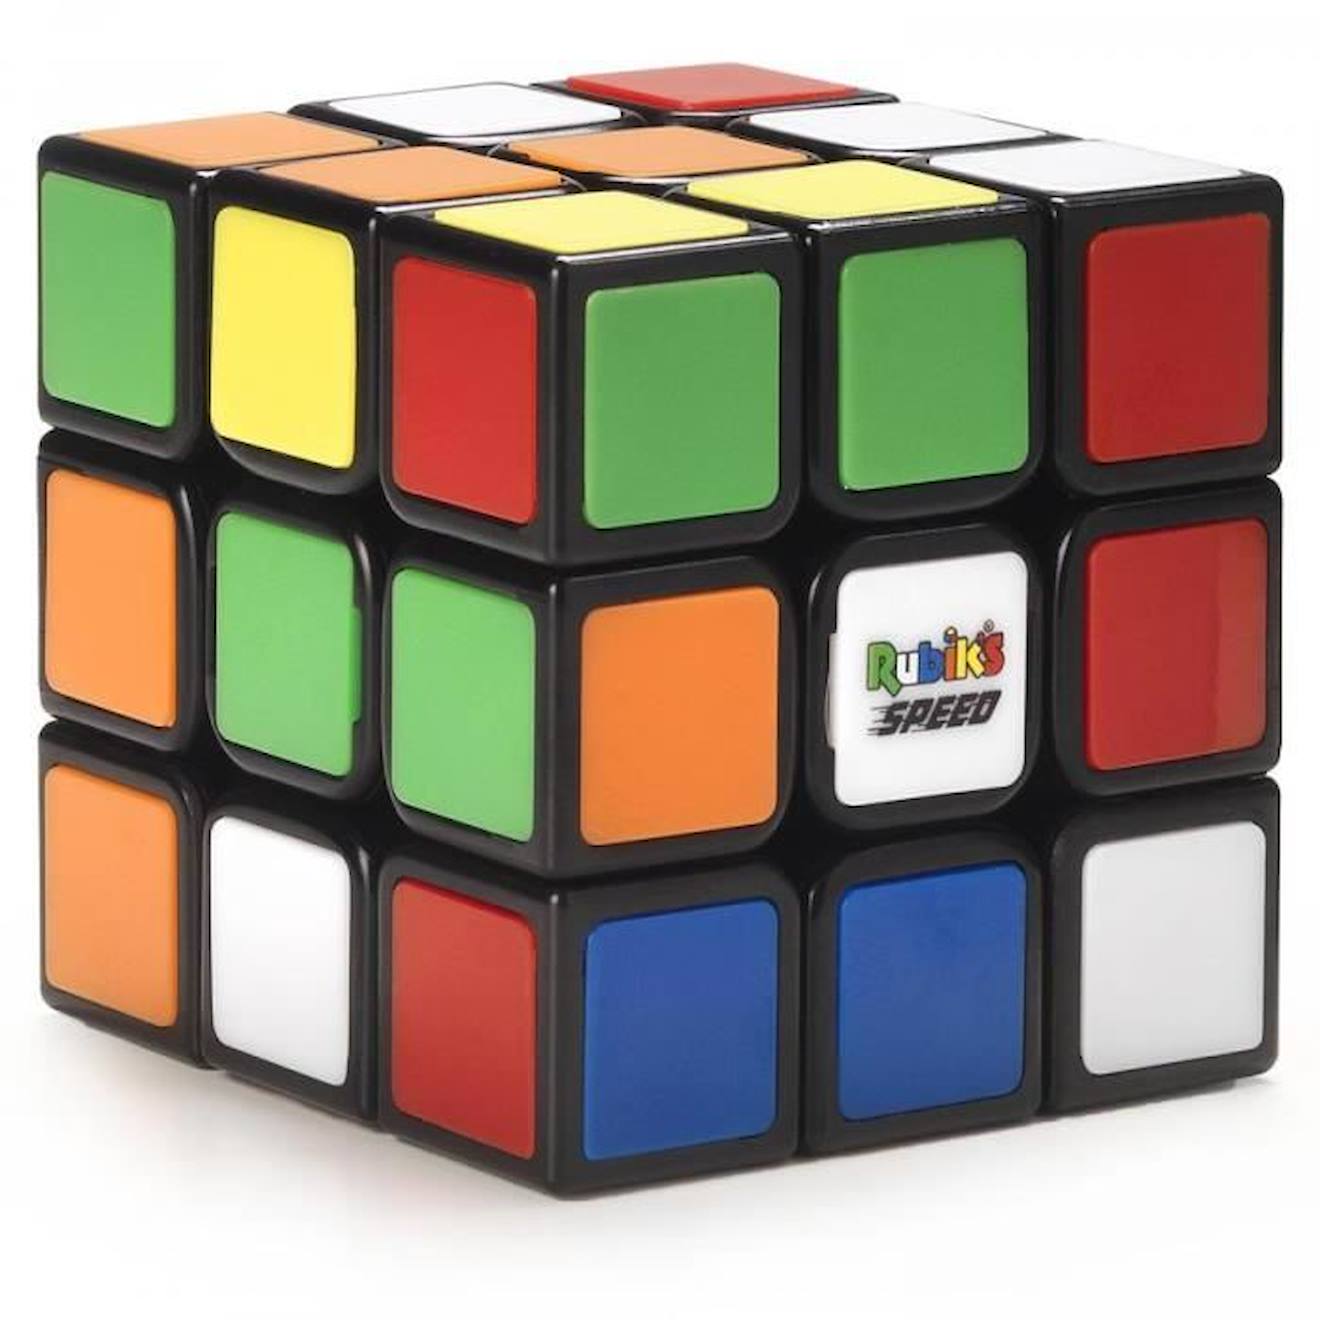 Jeu De Société - Asmodee - Rubik's Cube Speed - 26 Pièces - Blanc - Mixte Blanc